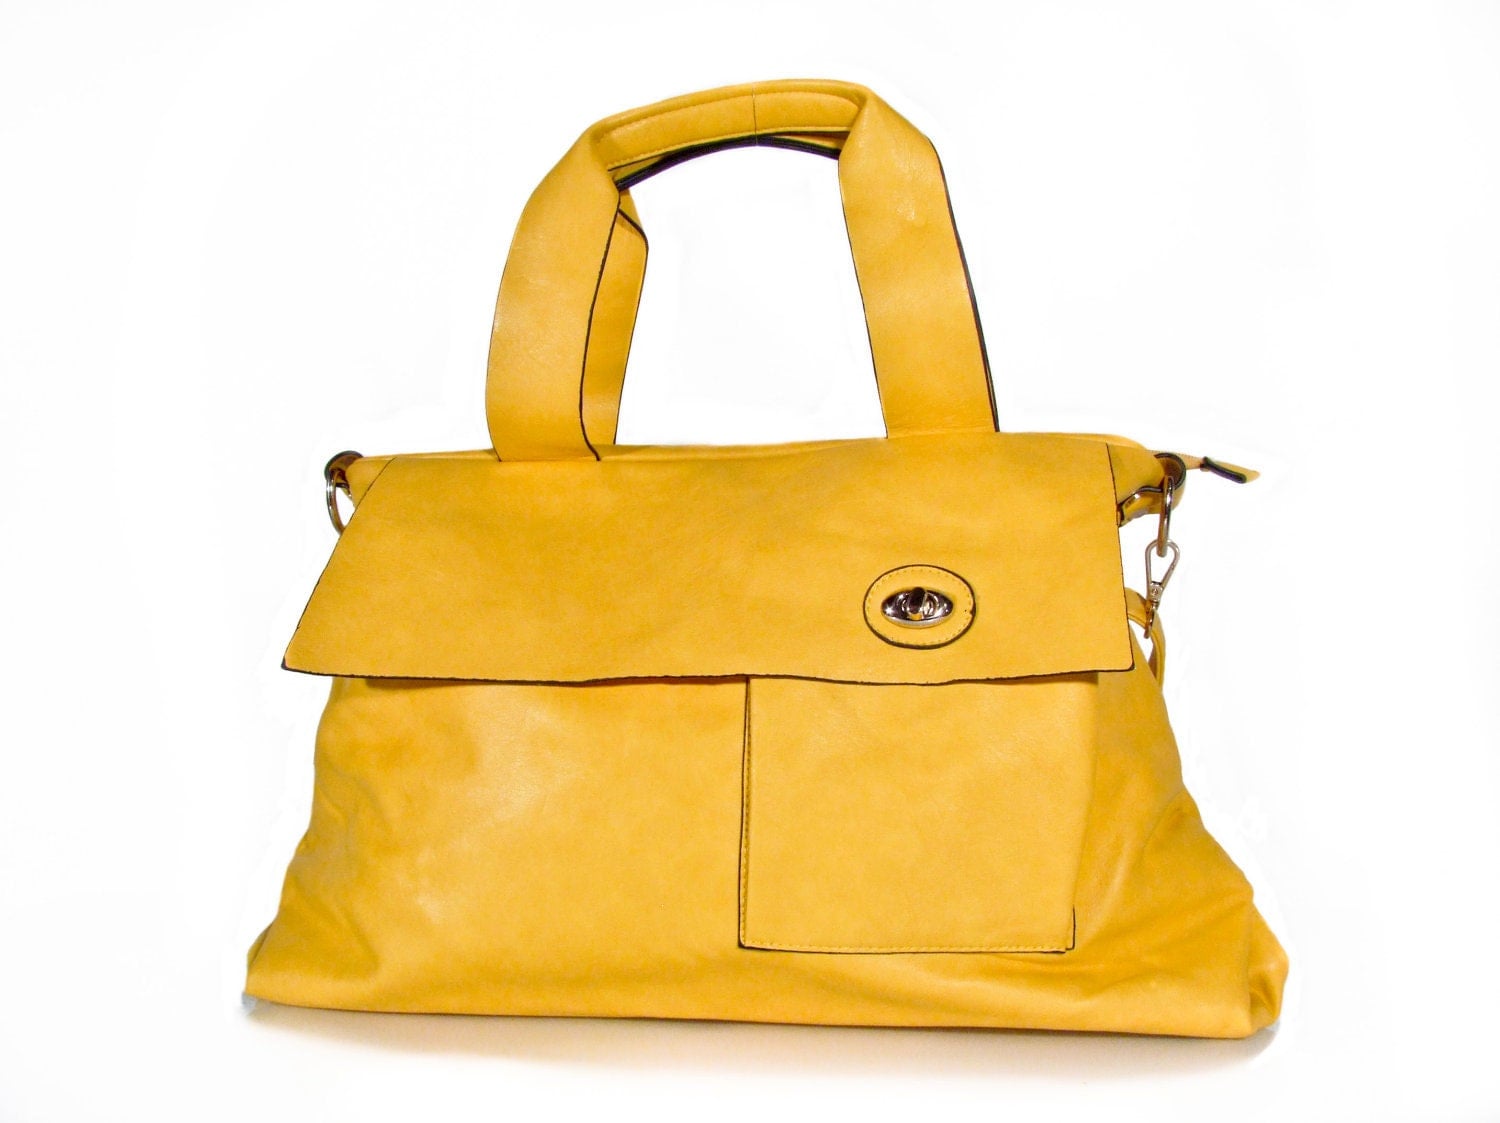 vegan leather handbag purse yellow . the by VeganLeatherHandbags